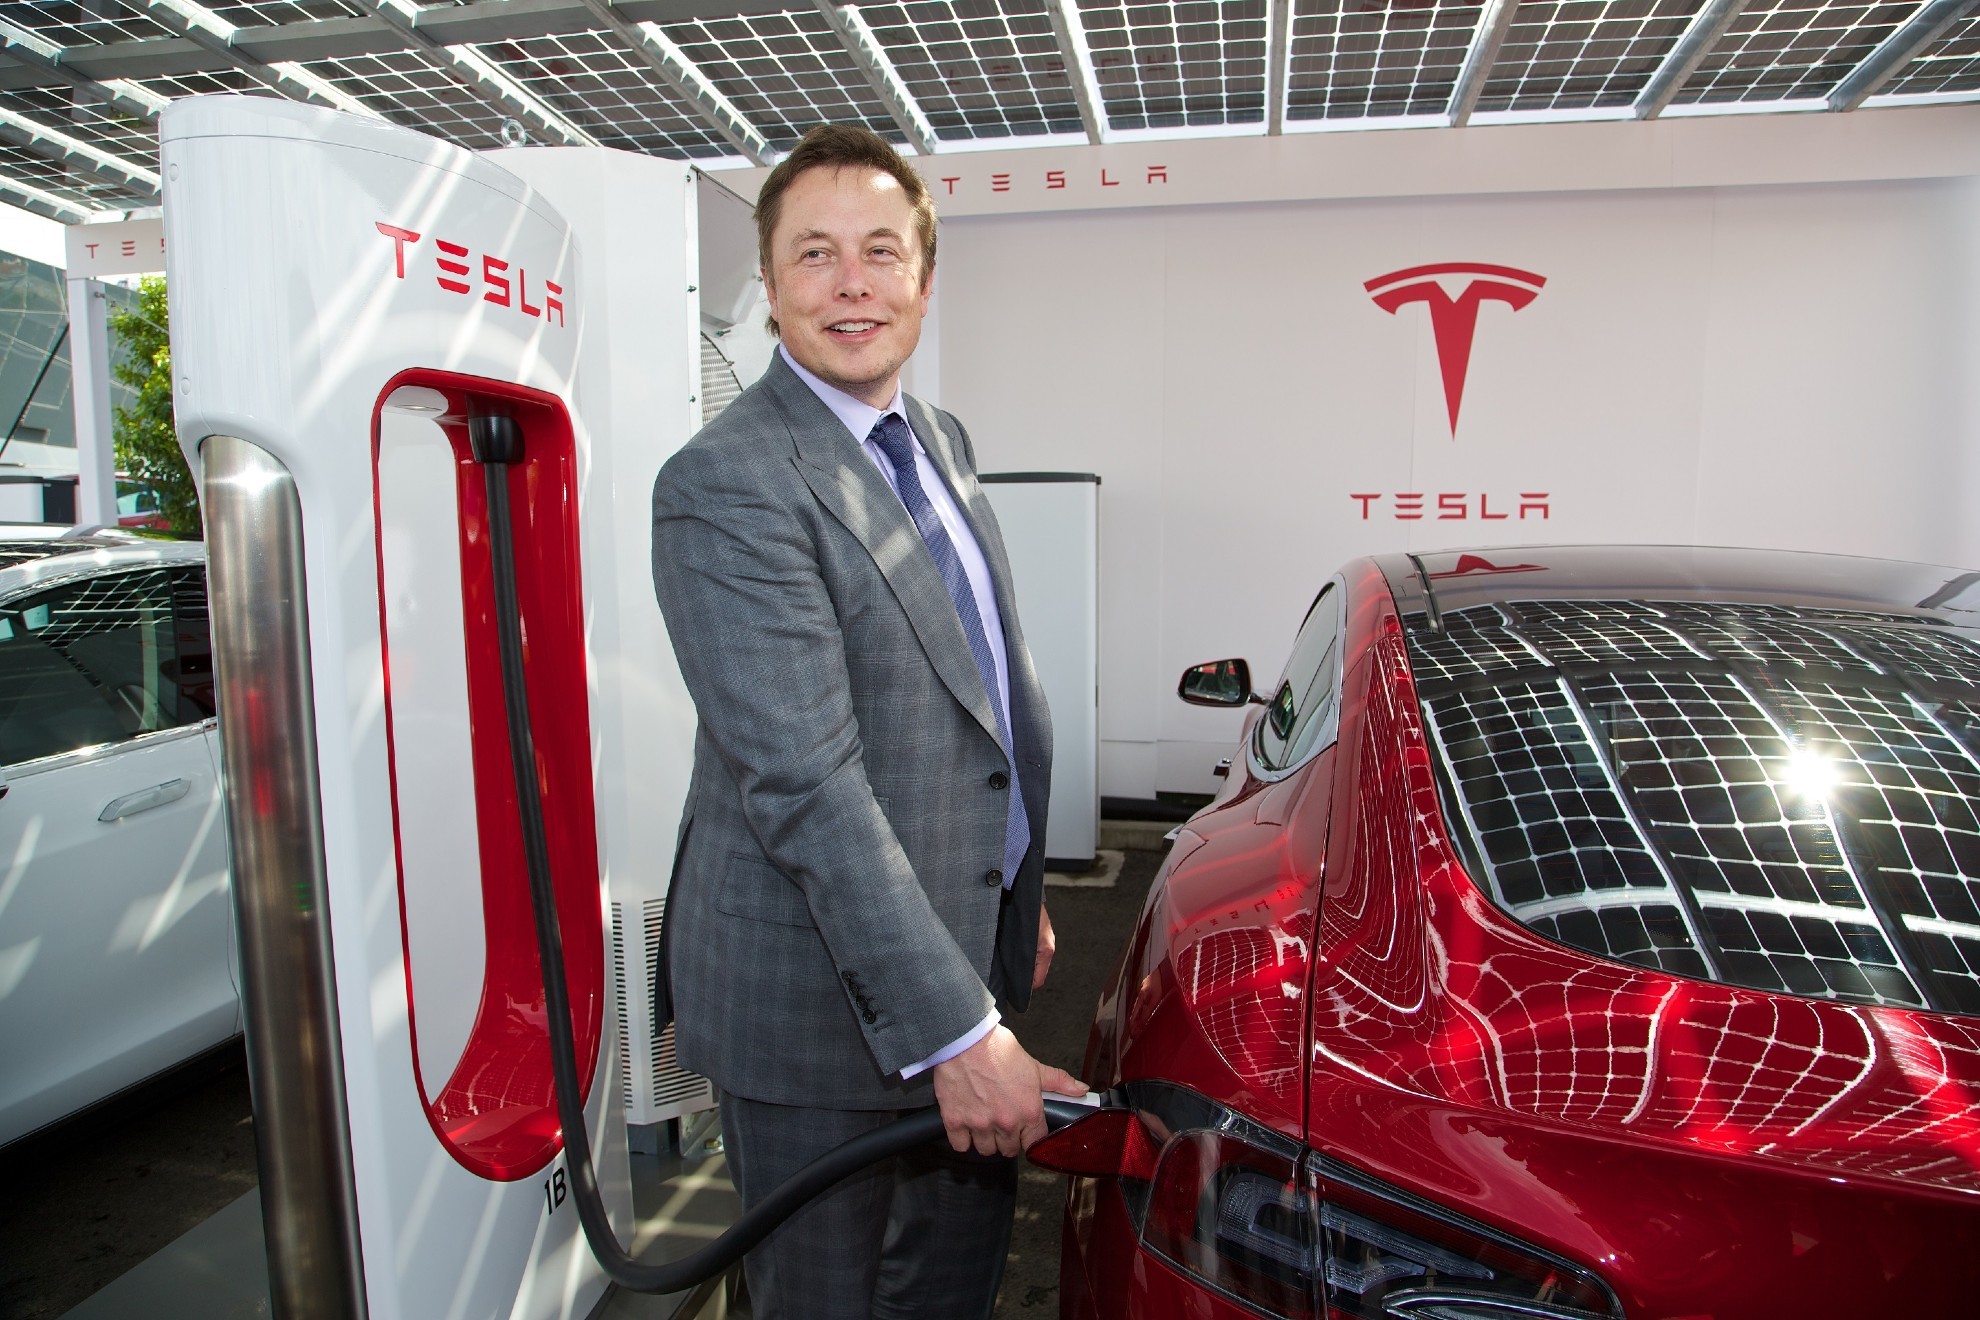 Twitter - General Motors - Elon Musk - Tesla - publicidad